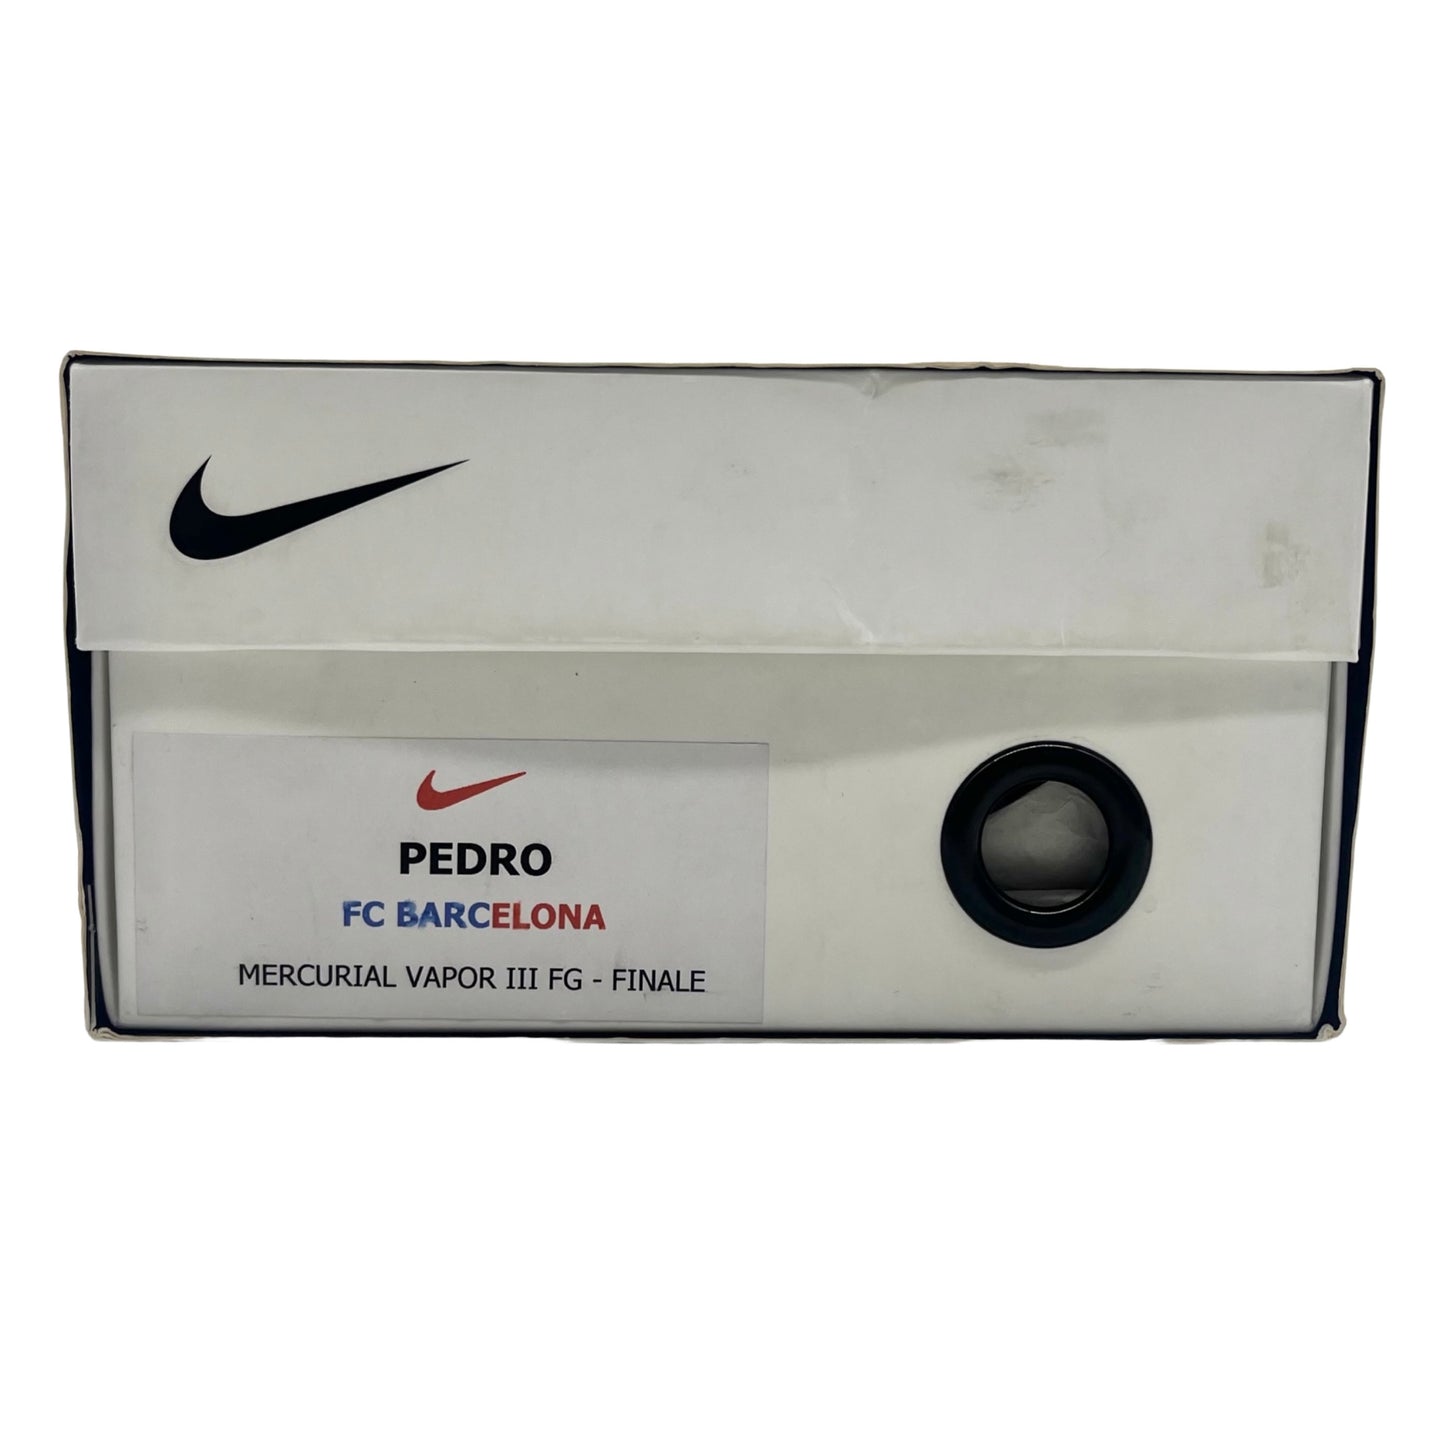 Pedro Promo Issued Nike Mercurial Vapor Superfly III 2011 UEFA Champions League Final